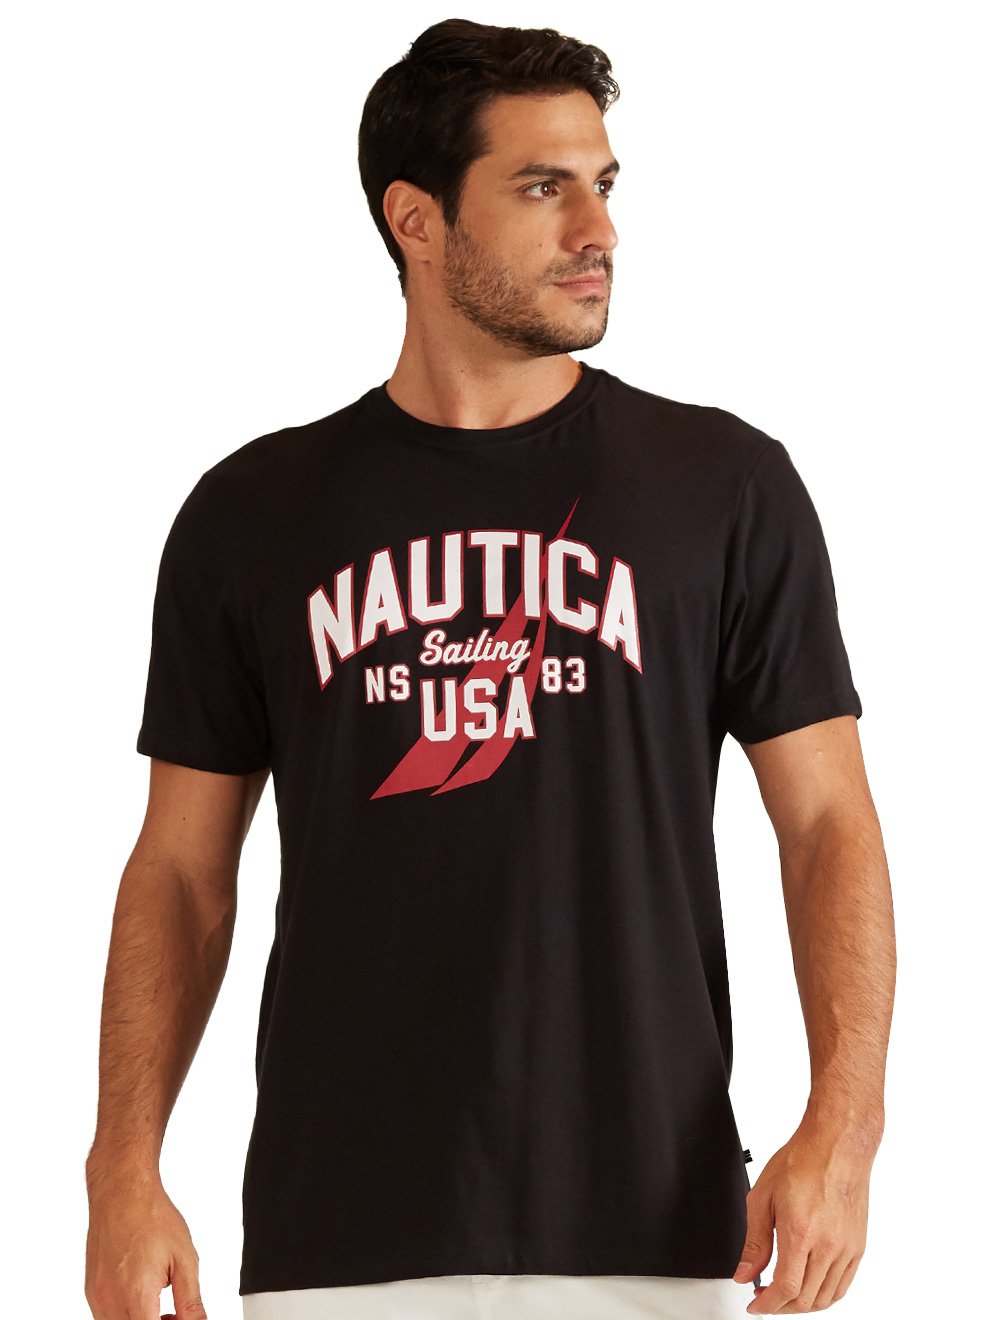 Camiseta Nautica Masculina Arc Sailing USA 83 Preta